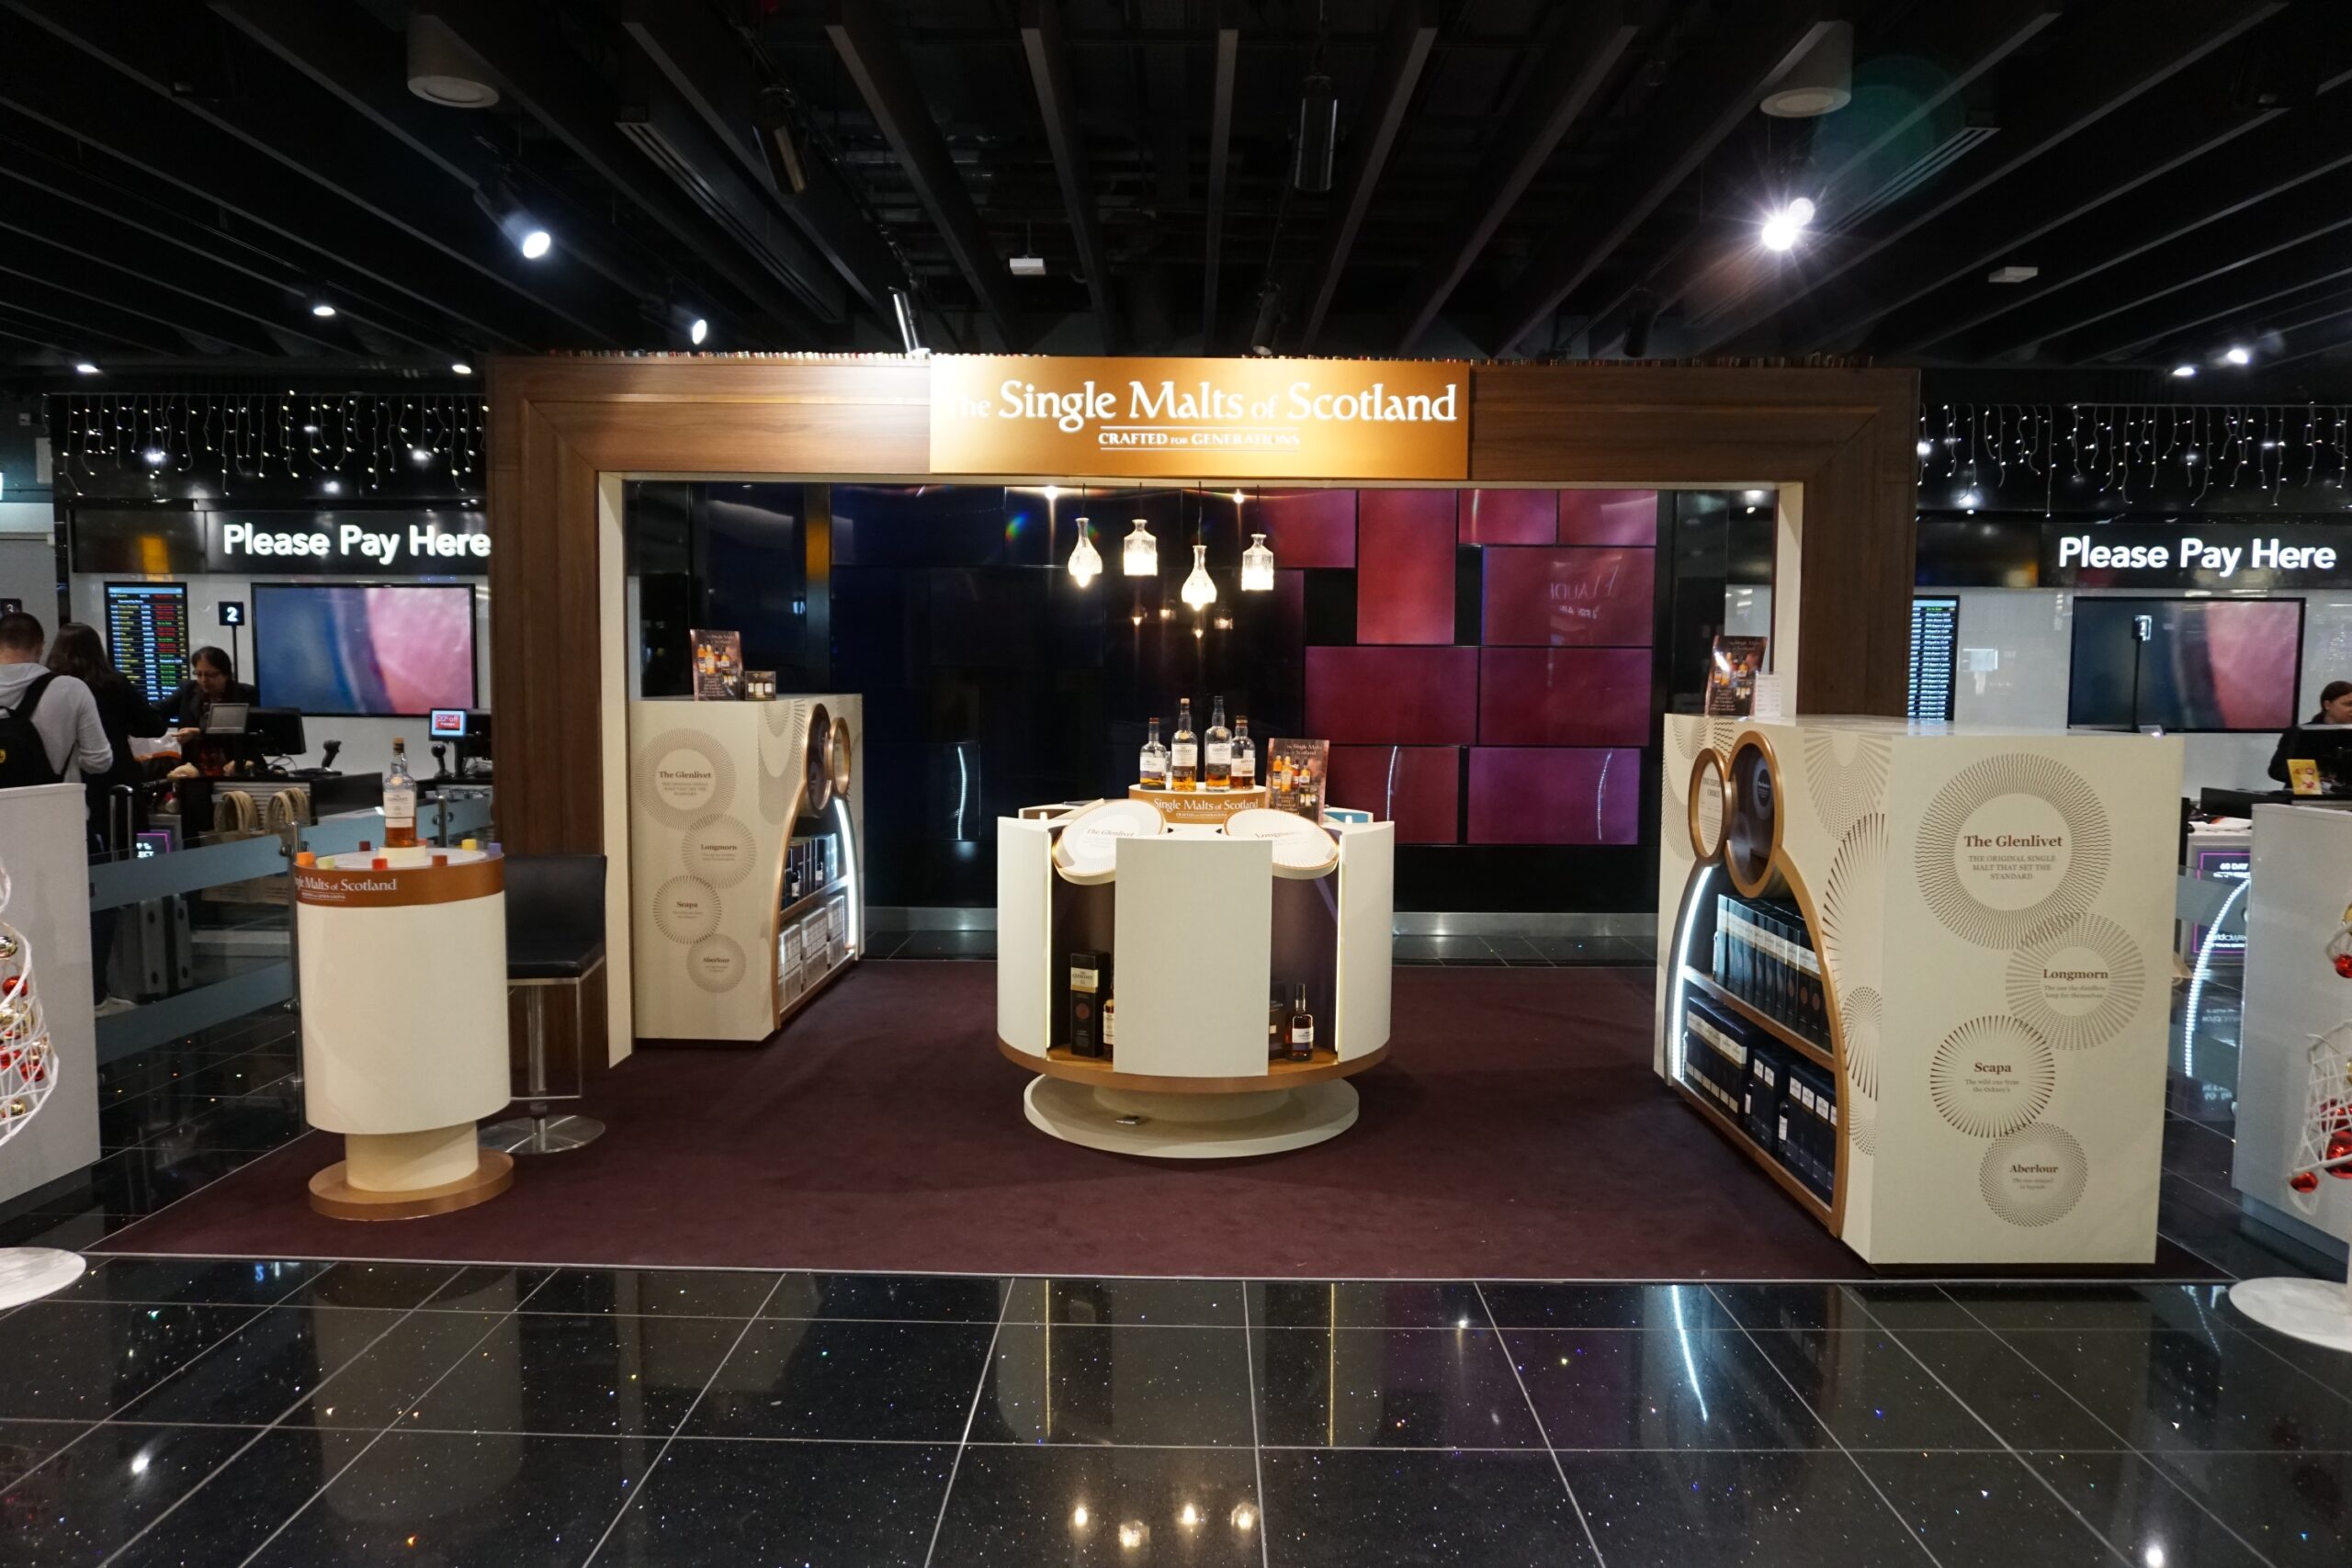 Pernod Ricard Travel Retail EMEA - The Single Malts of Scotland activation at London Heathrow Airport